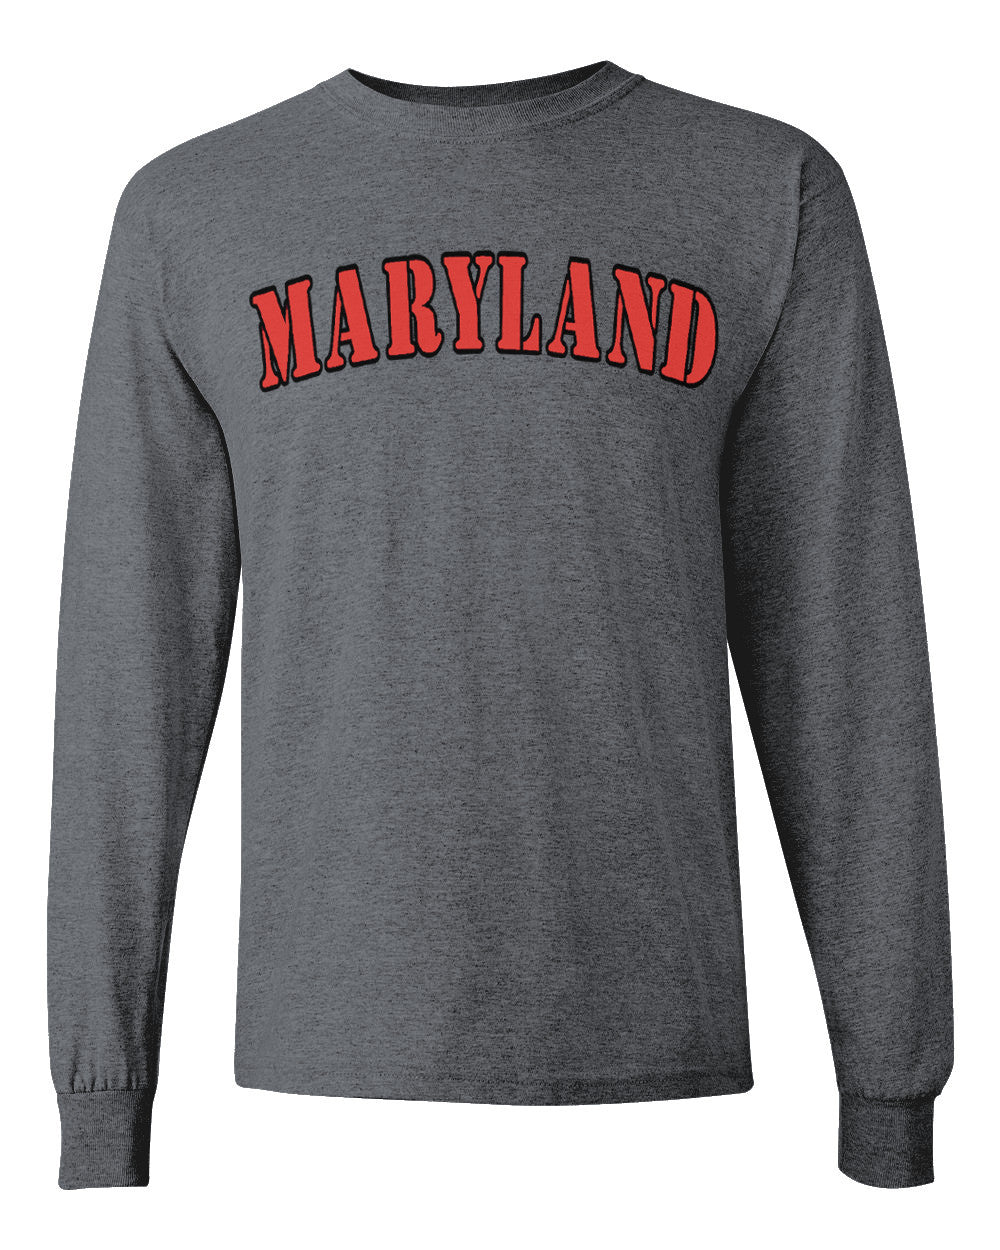 Maryland Plain Text Long Sleeve Shirt (Dark Grey)